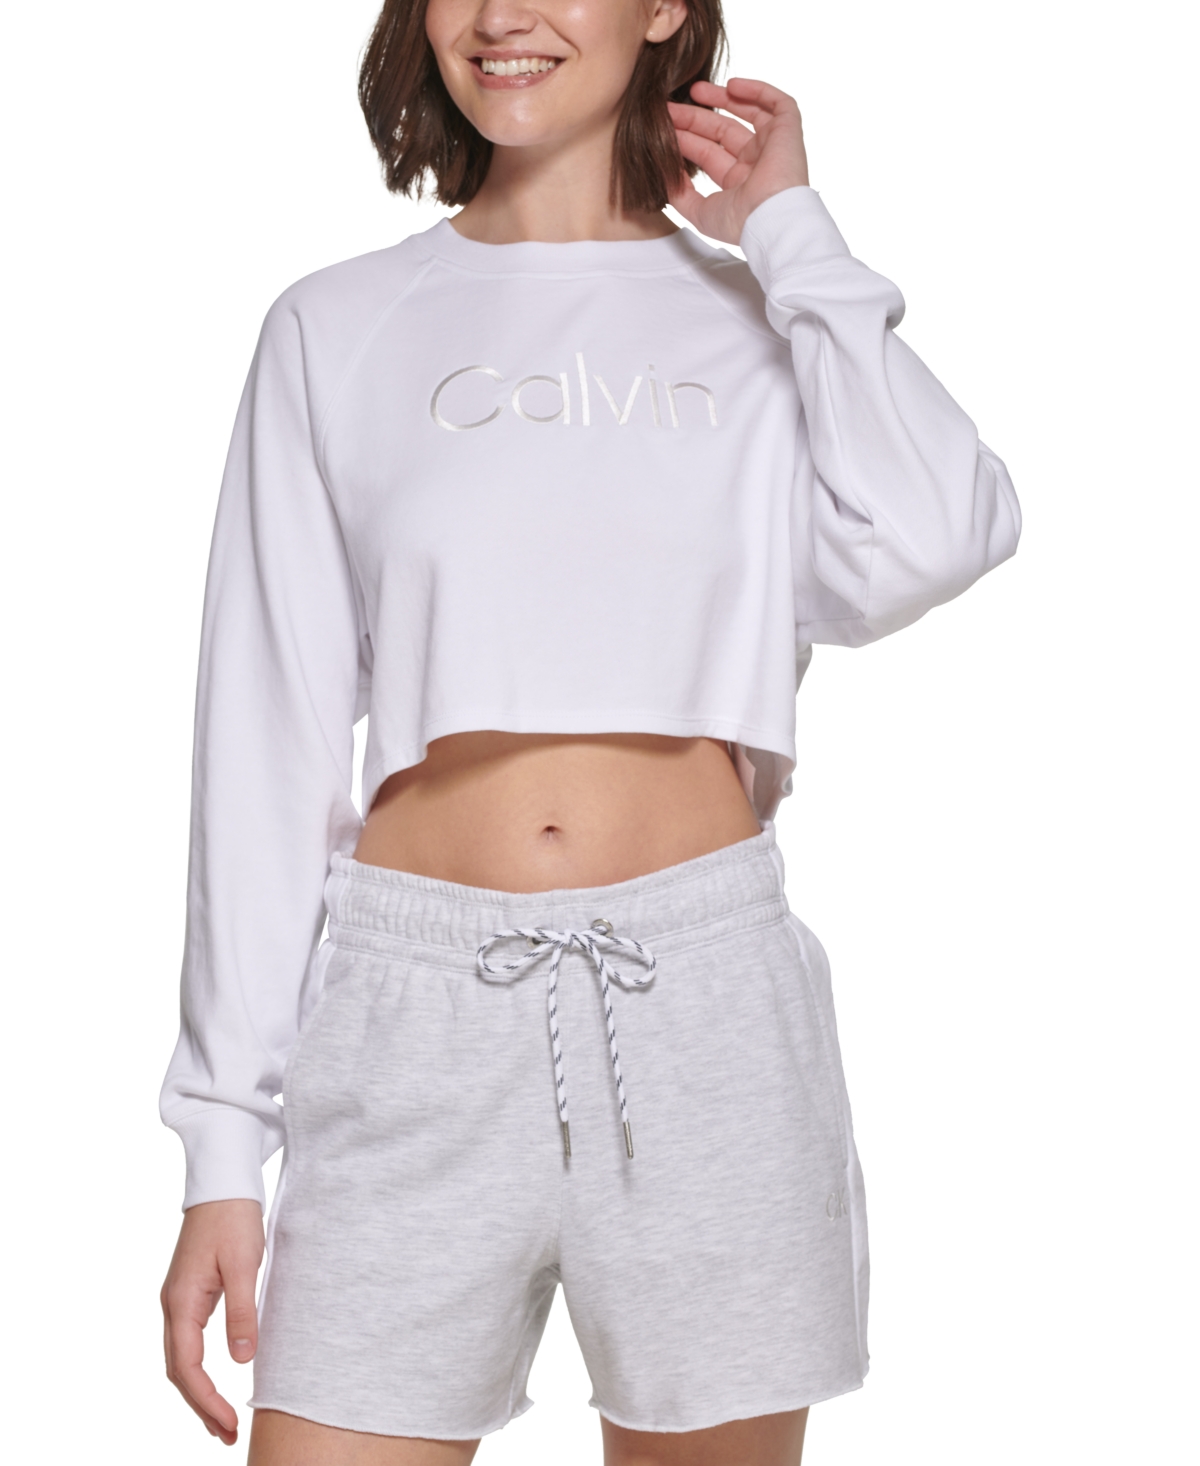 Calvin Klein Performance Women's Embroidered Logo Cropped Sweatshirt